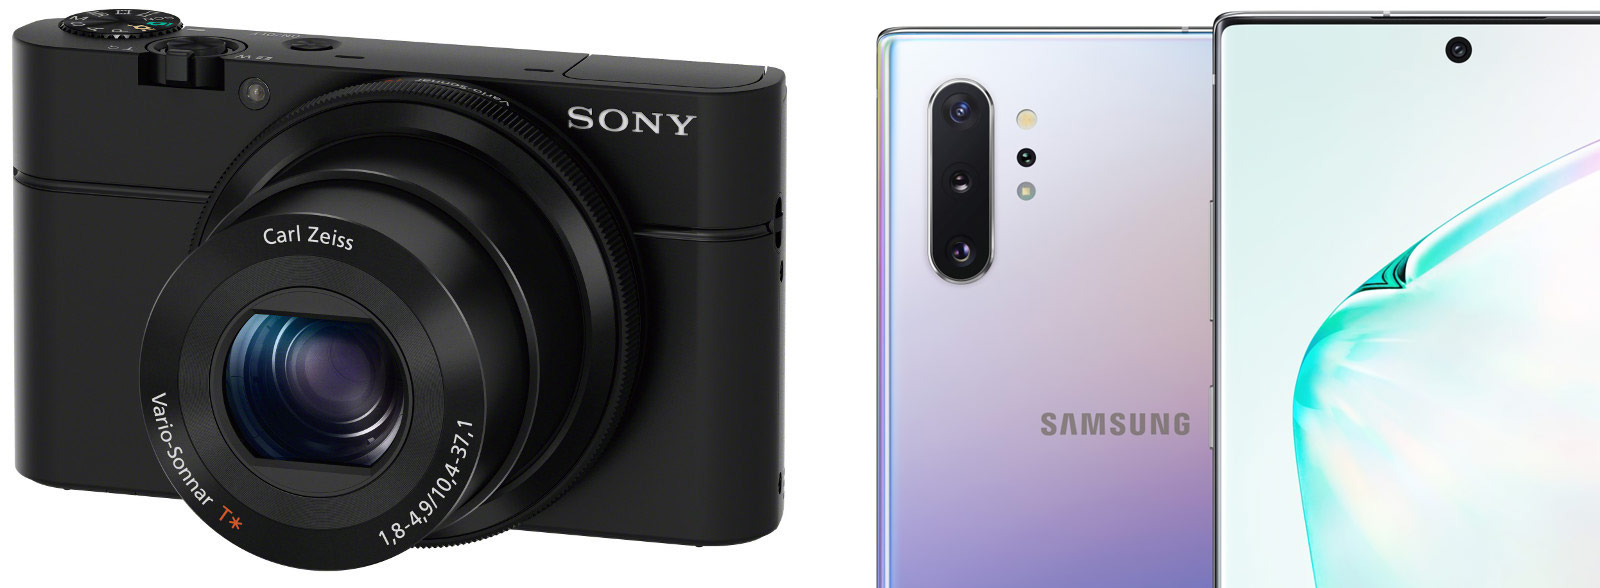 Samsung Galaxy Note10+ versus Sony Cyber-Shot DSC-RX100 (I)